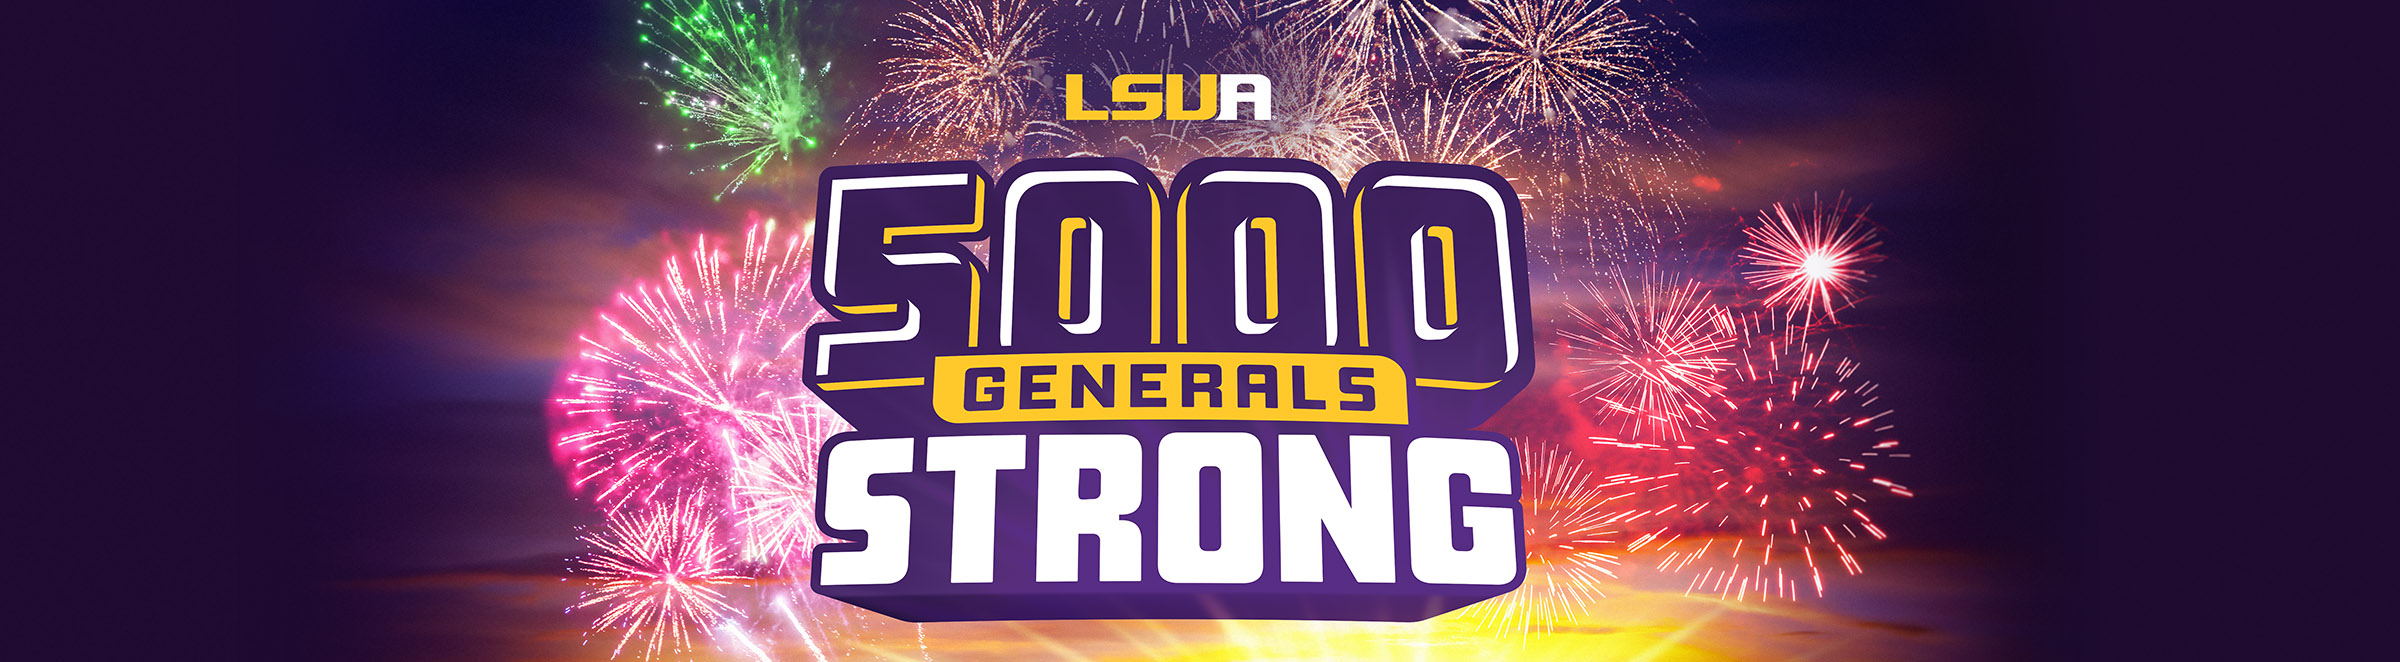 LSUA 5,000 Generals Strong